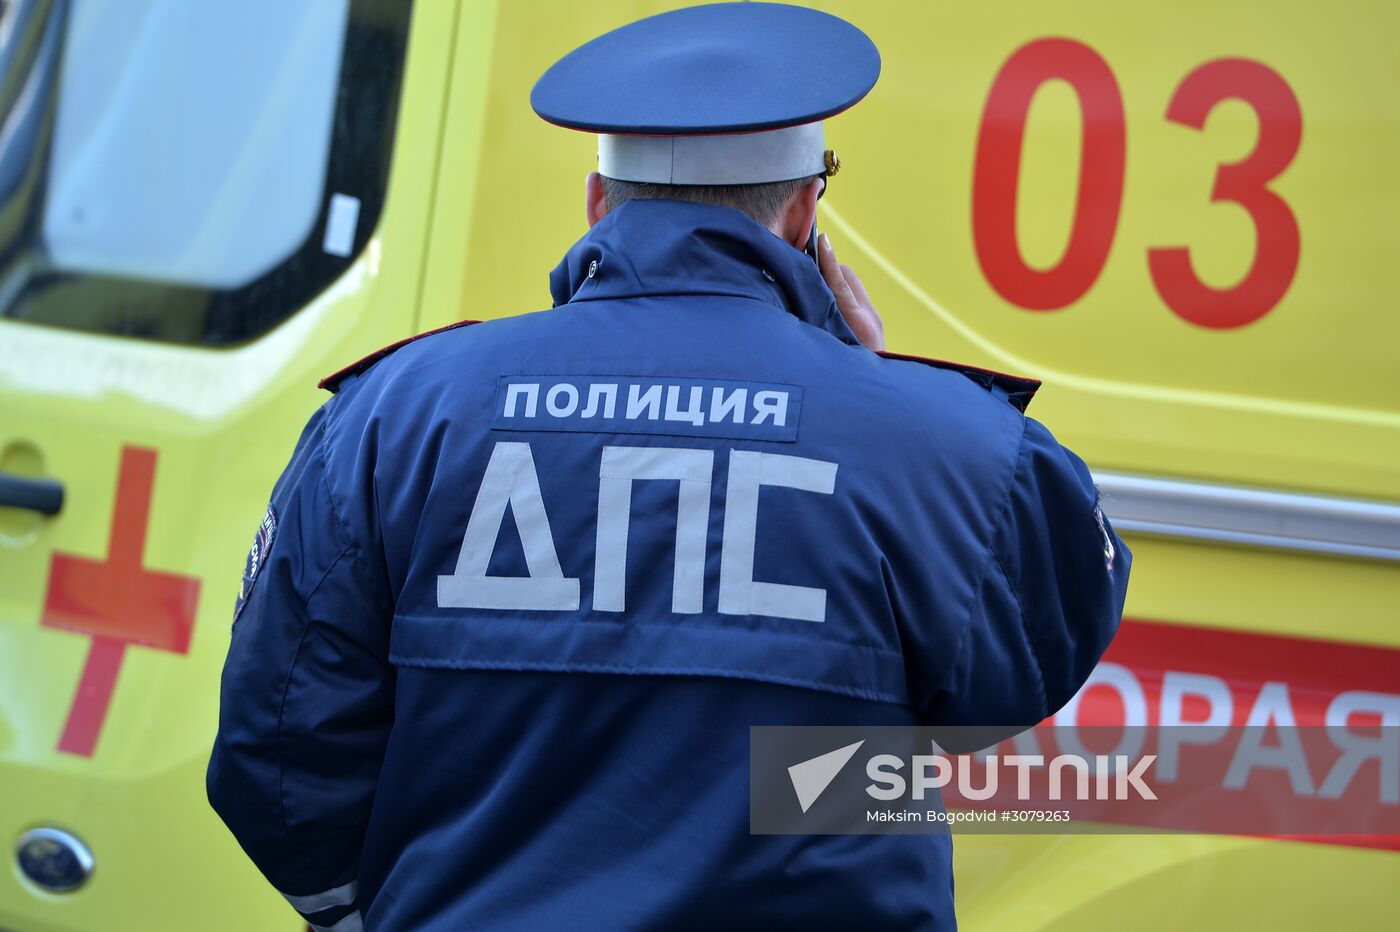 Healthcare facilities in Tatarstan receive new ambulance vehicles